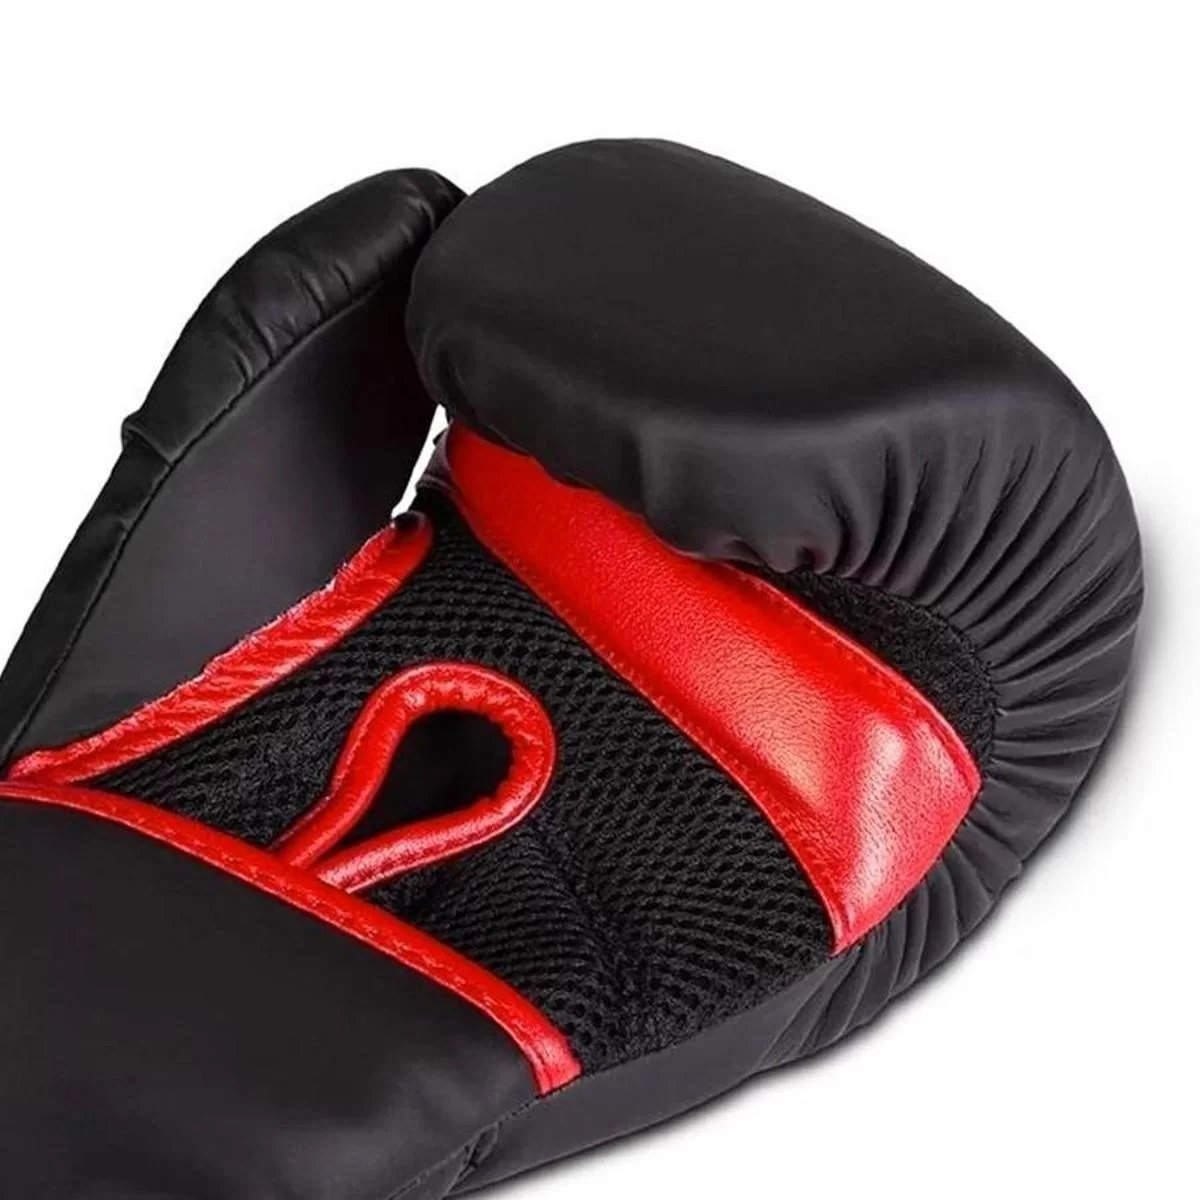 Kit Luva de Boxe Muay Thai - Naja Black Preto/vermelho + Bandagem+bucal:14/preto/vermelho - 4